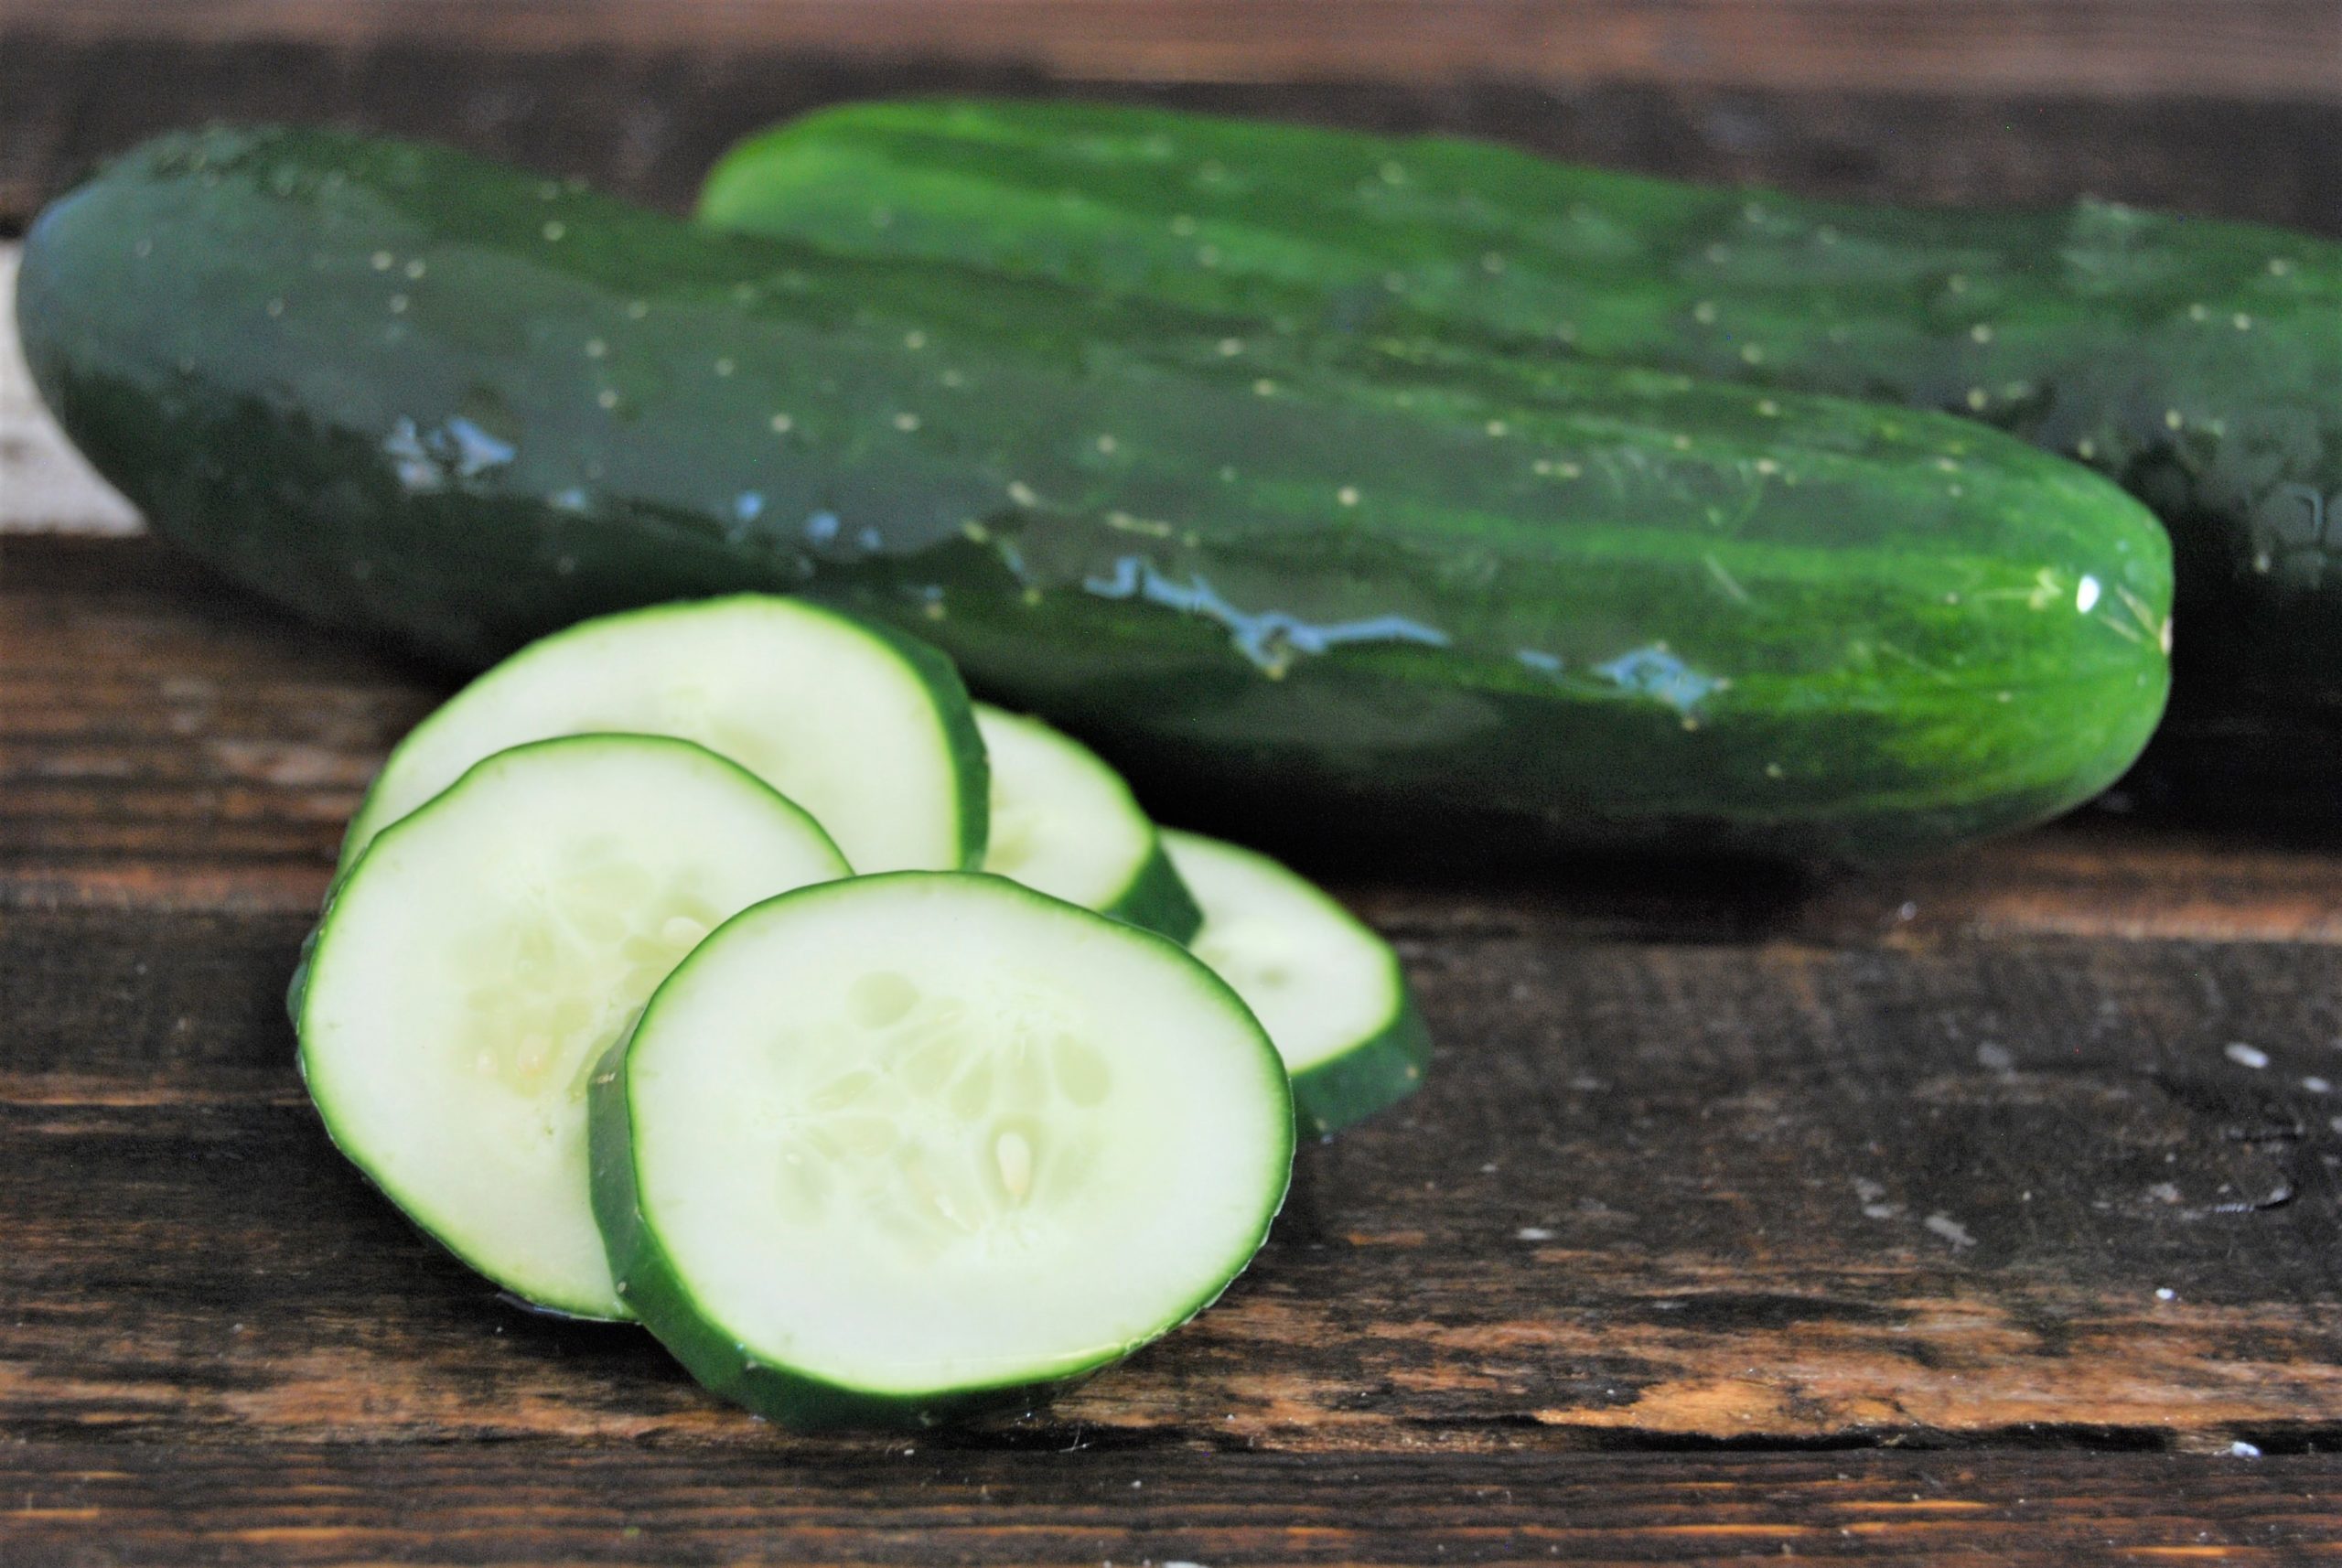 https://www.dailyharvestexpress.com/wp-content/uploads/2014/06/Cucumbers-min-scaled.jpg